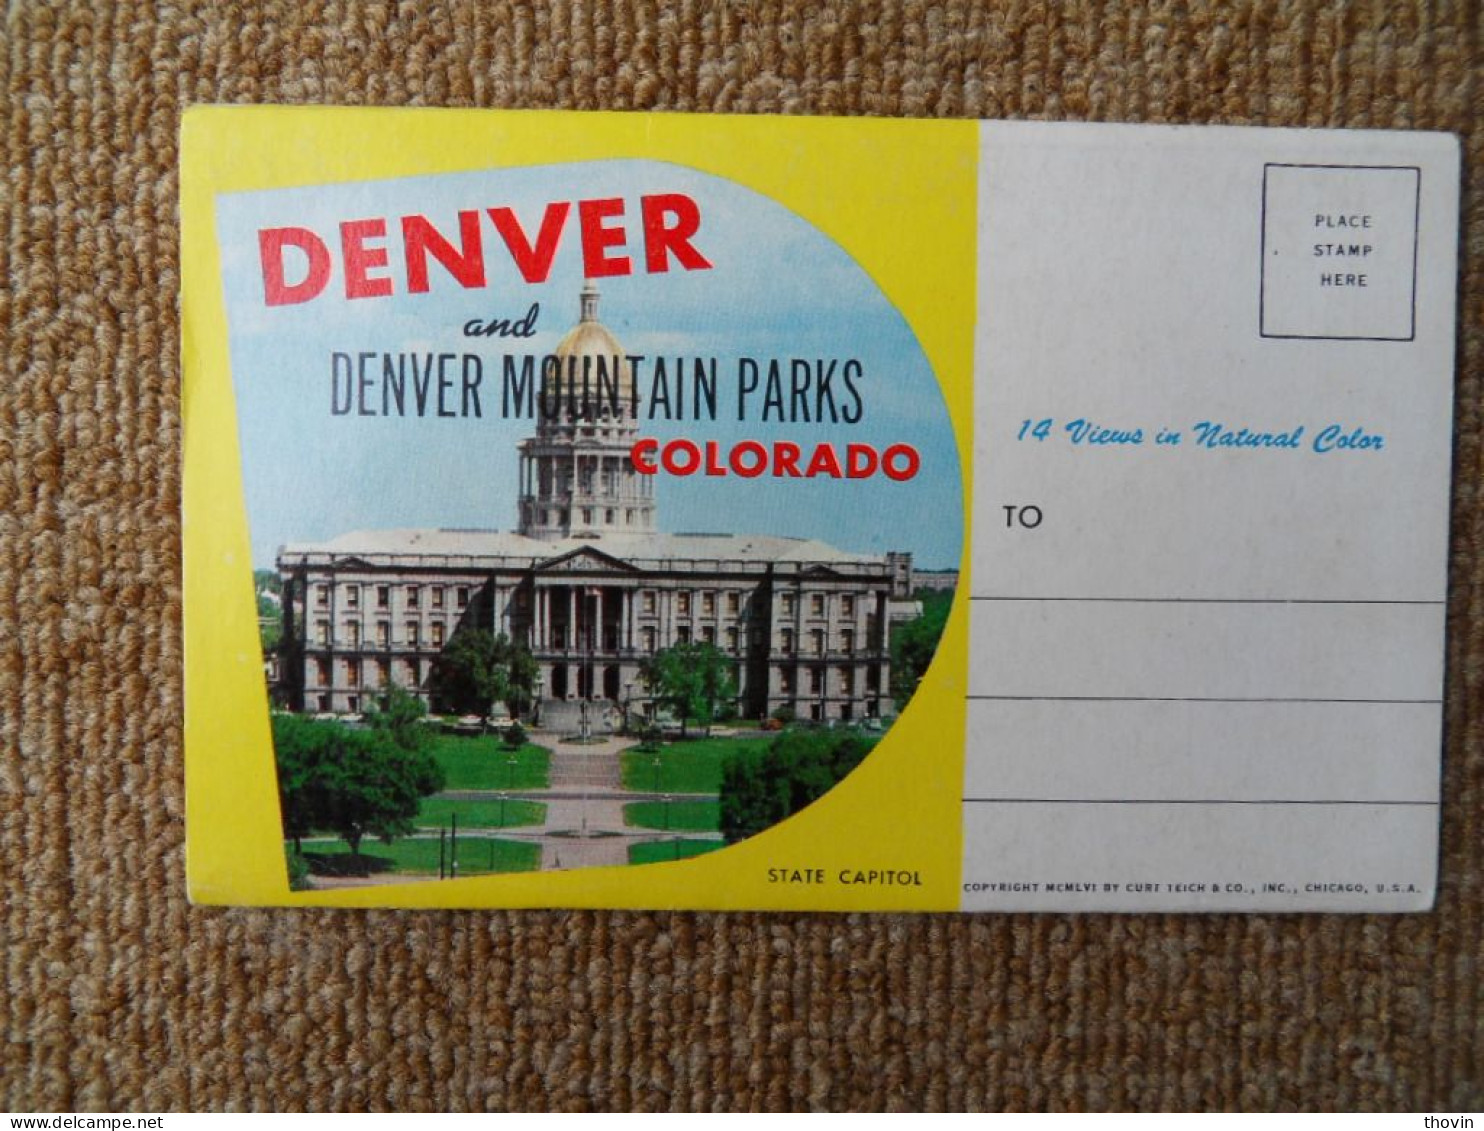 KB11/1106-Carnet Dépliant Denver And Denver Mountain Parks Colorado 14 Views In Natural Color - Denver